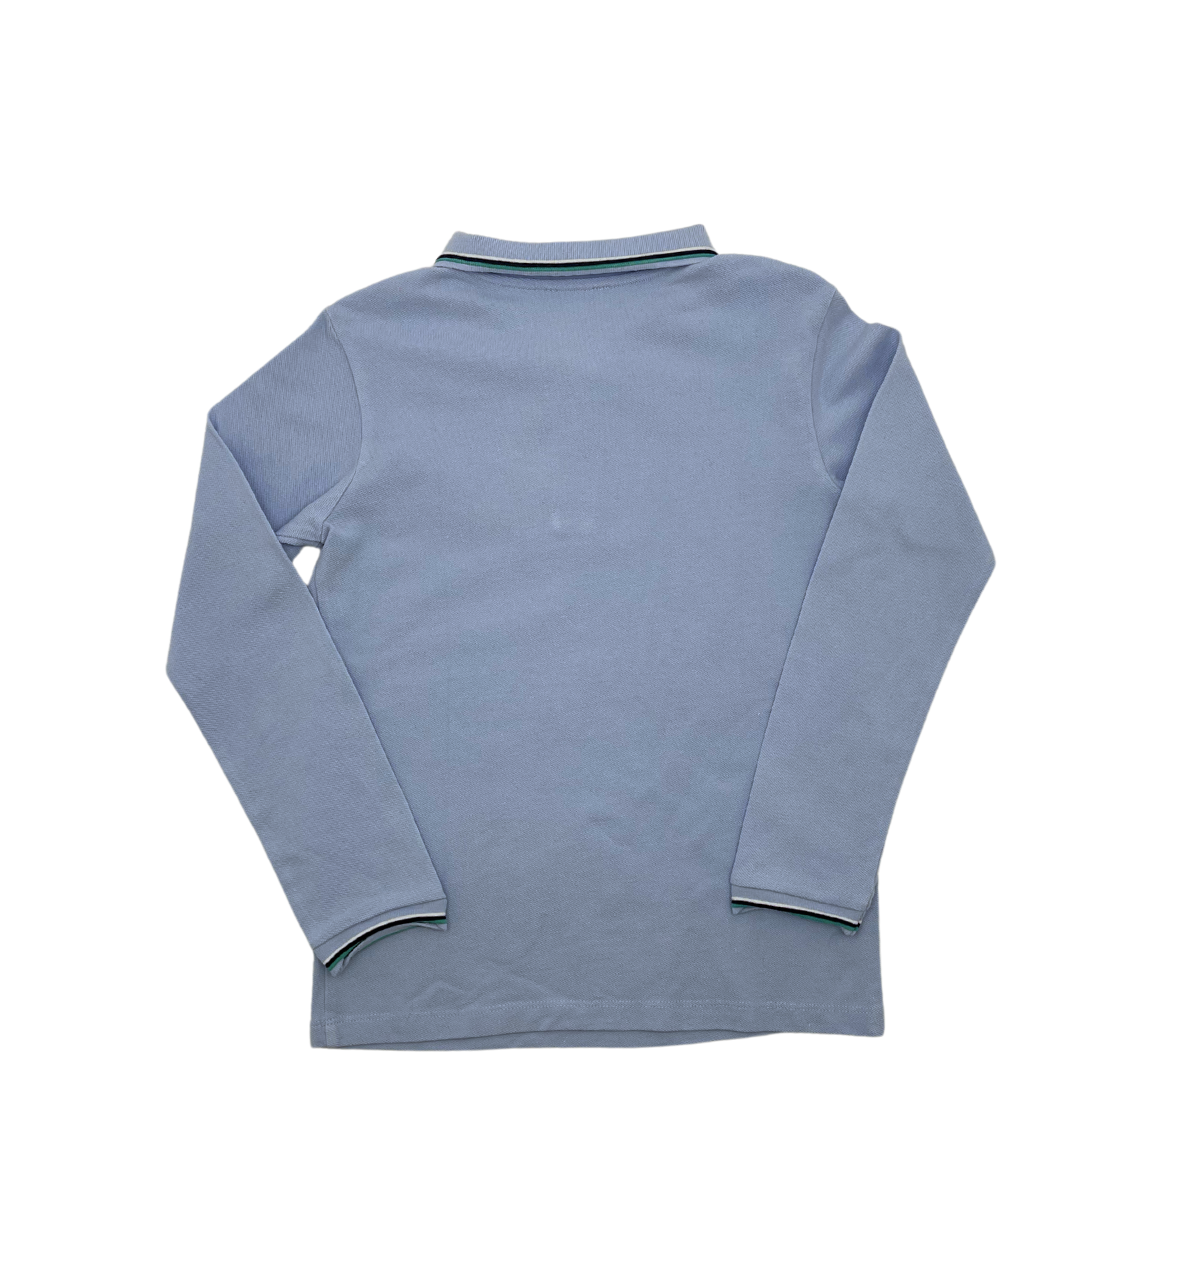 JACADI - Paris blue polo shirt - 8 years old